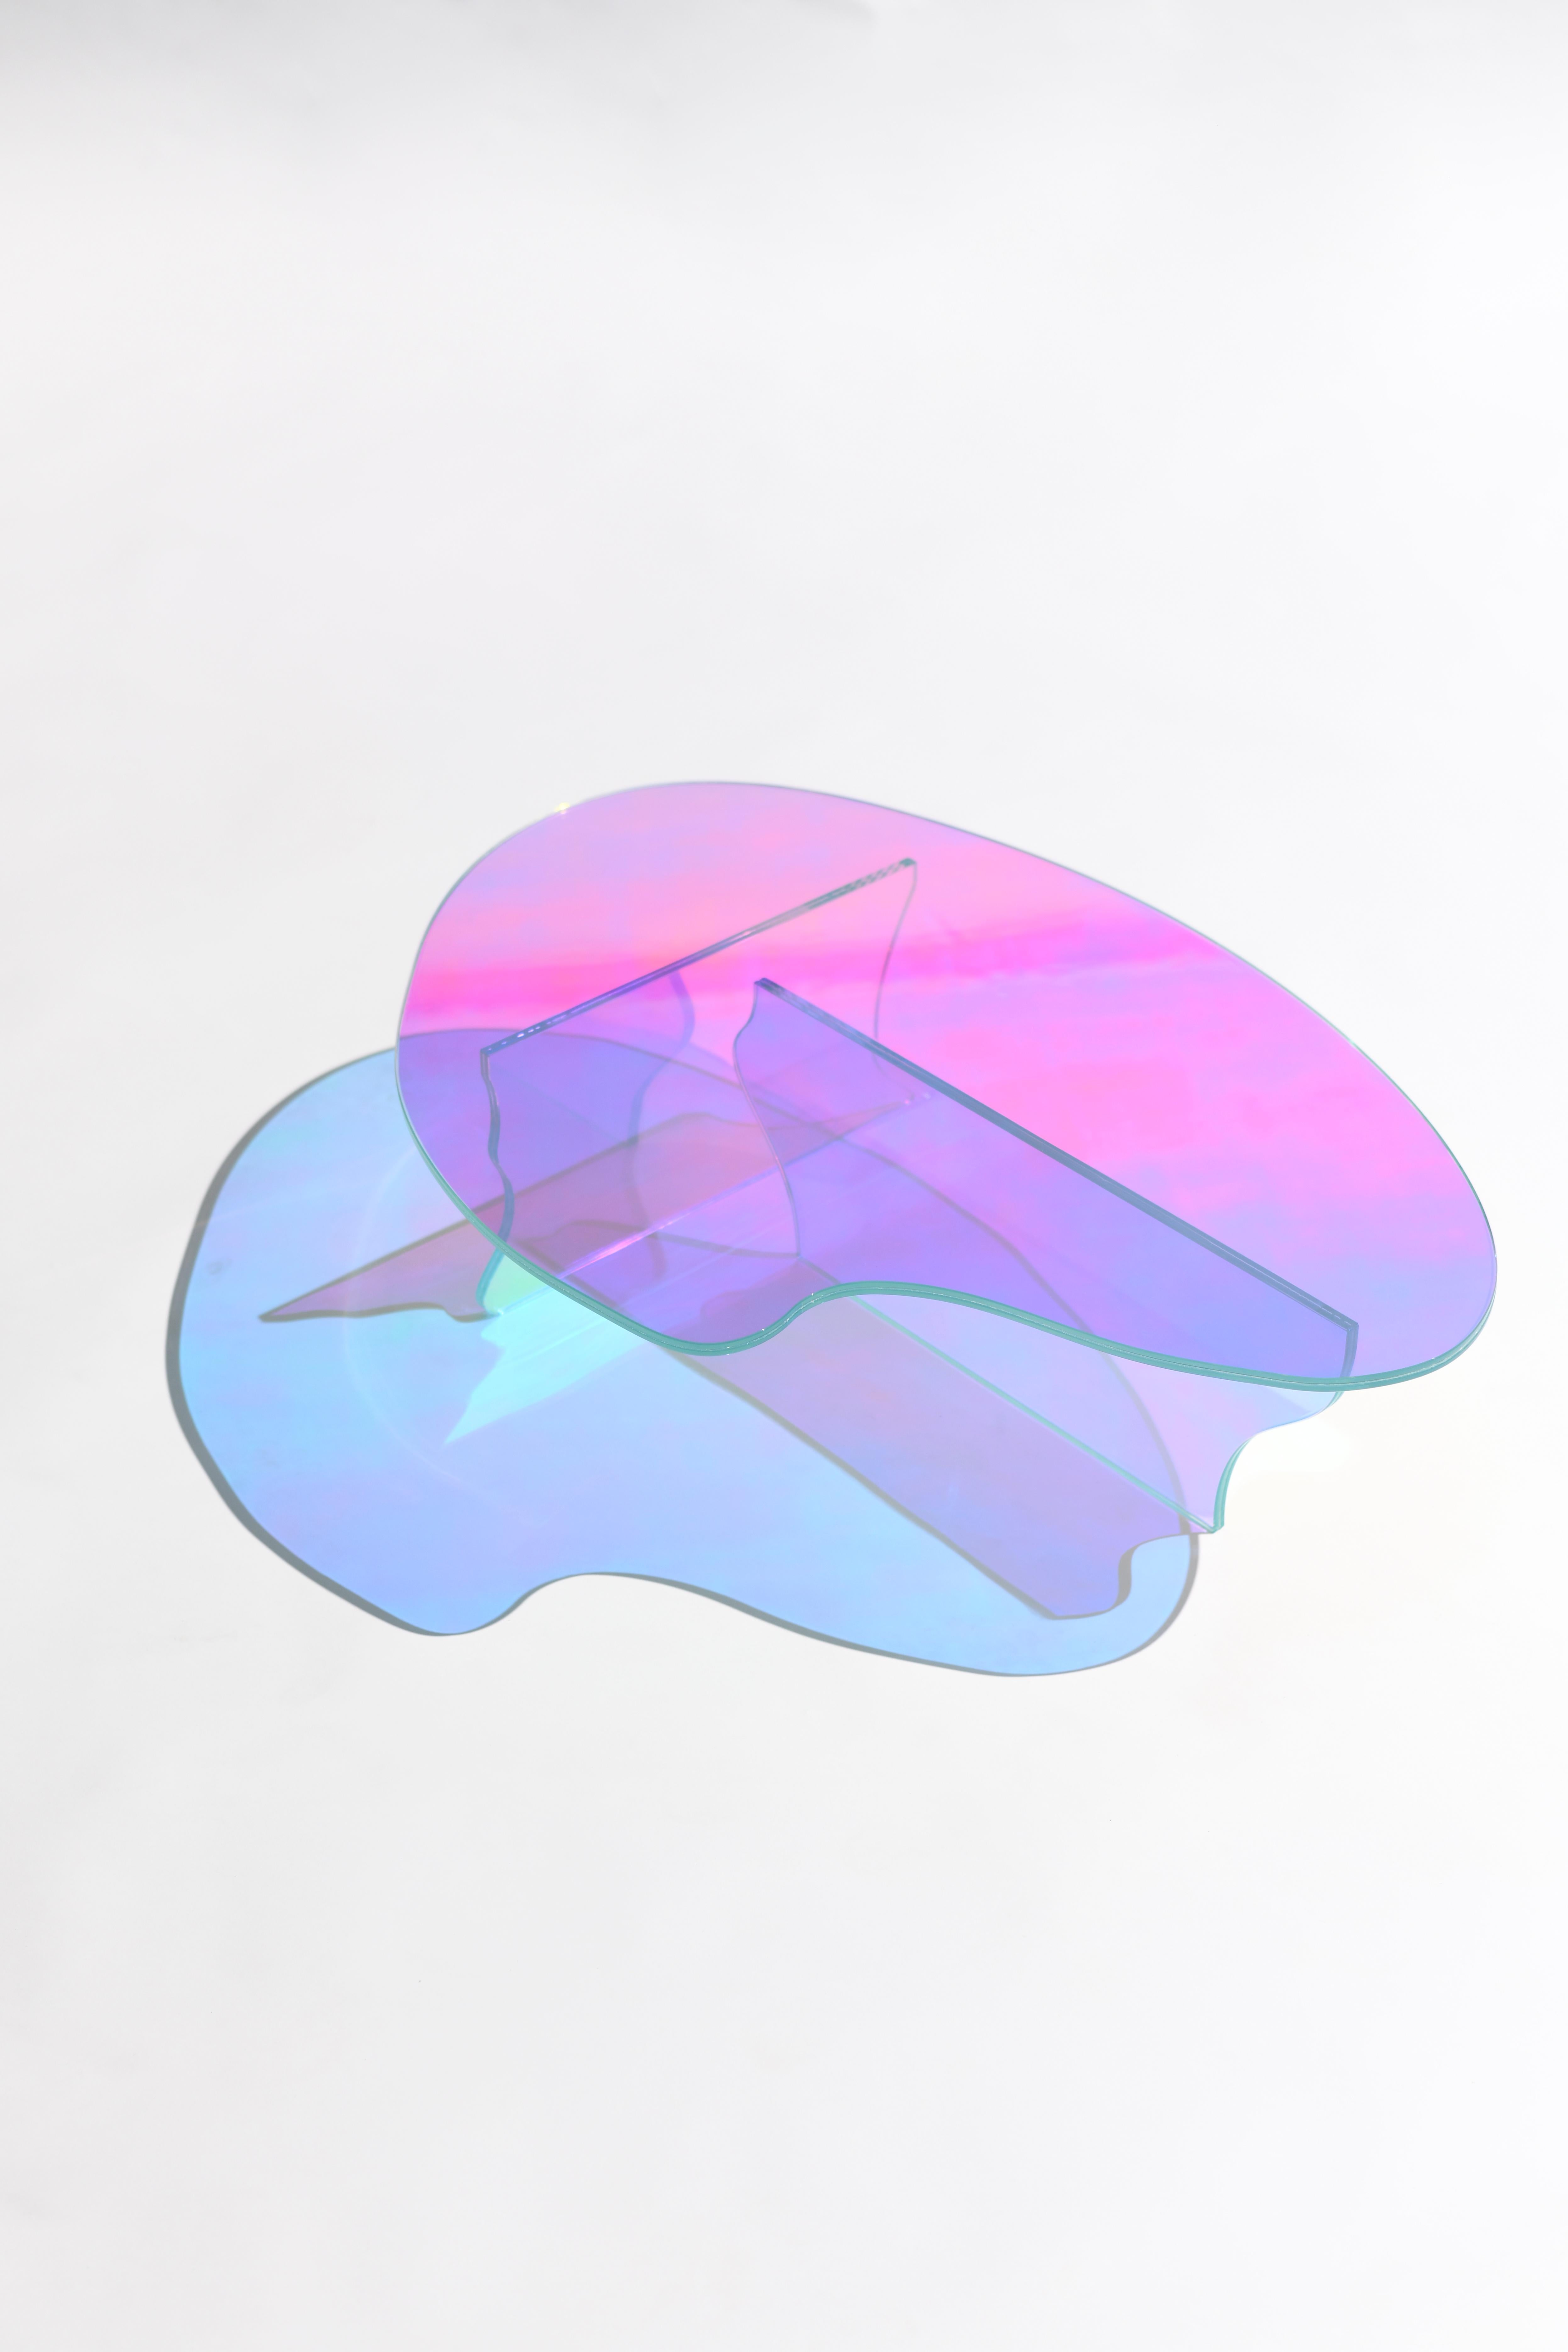 European Kinetic Colors Glass Table by Brajak Vitberg